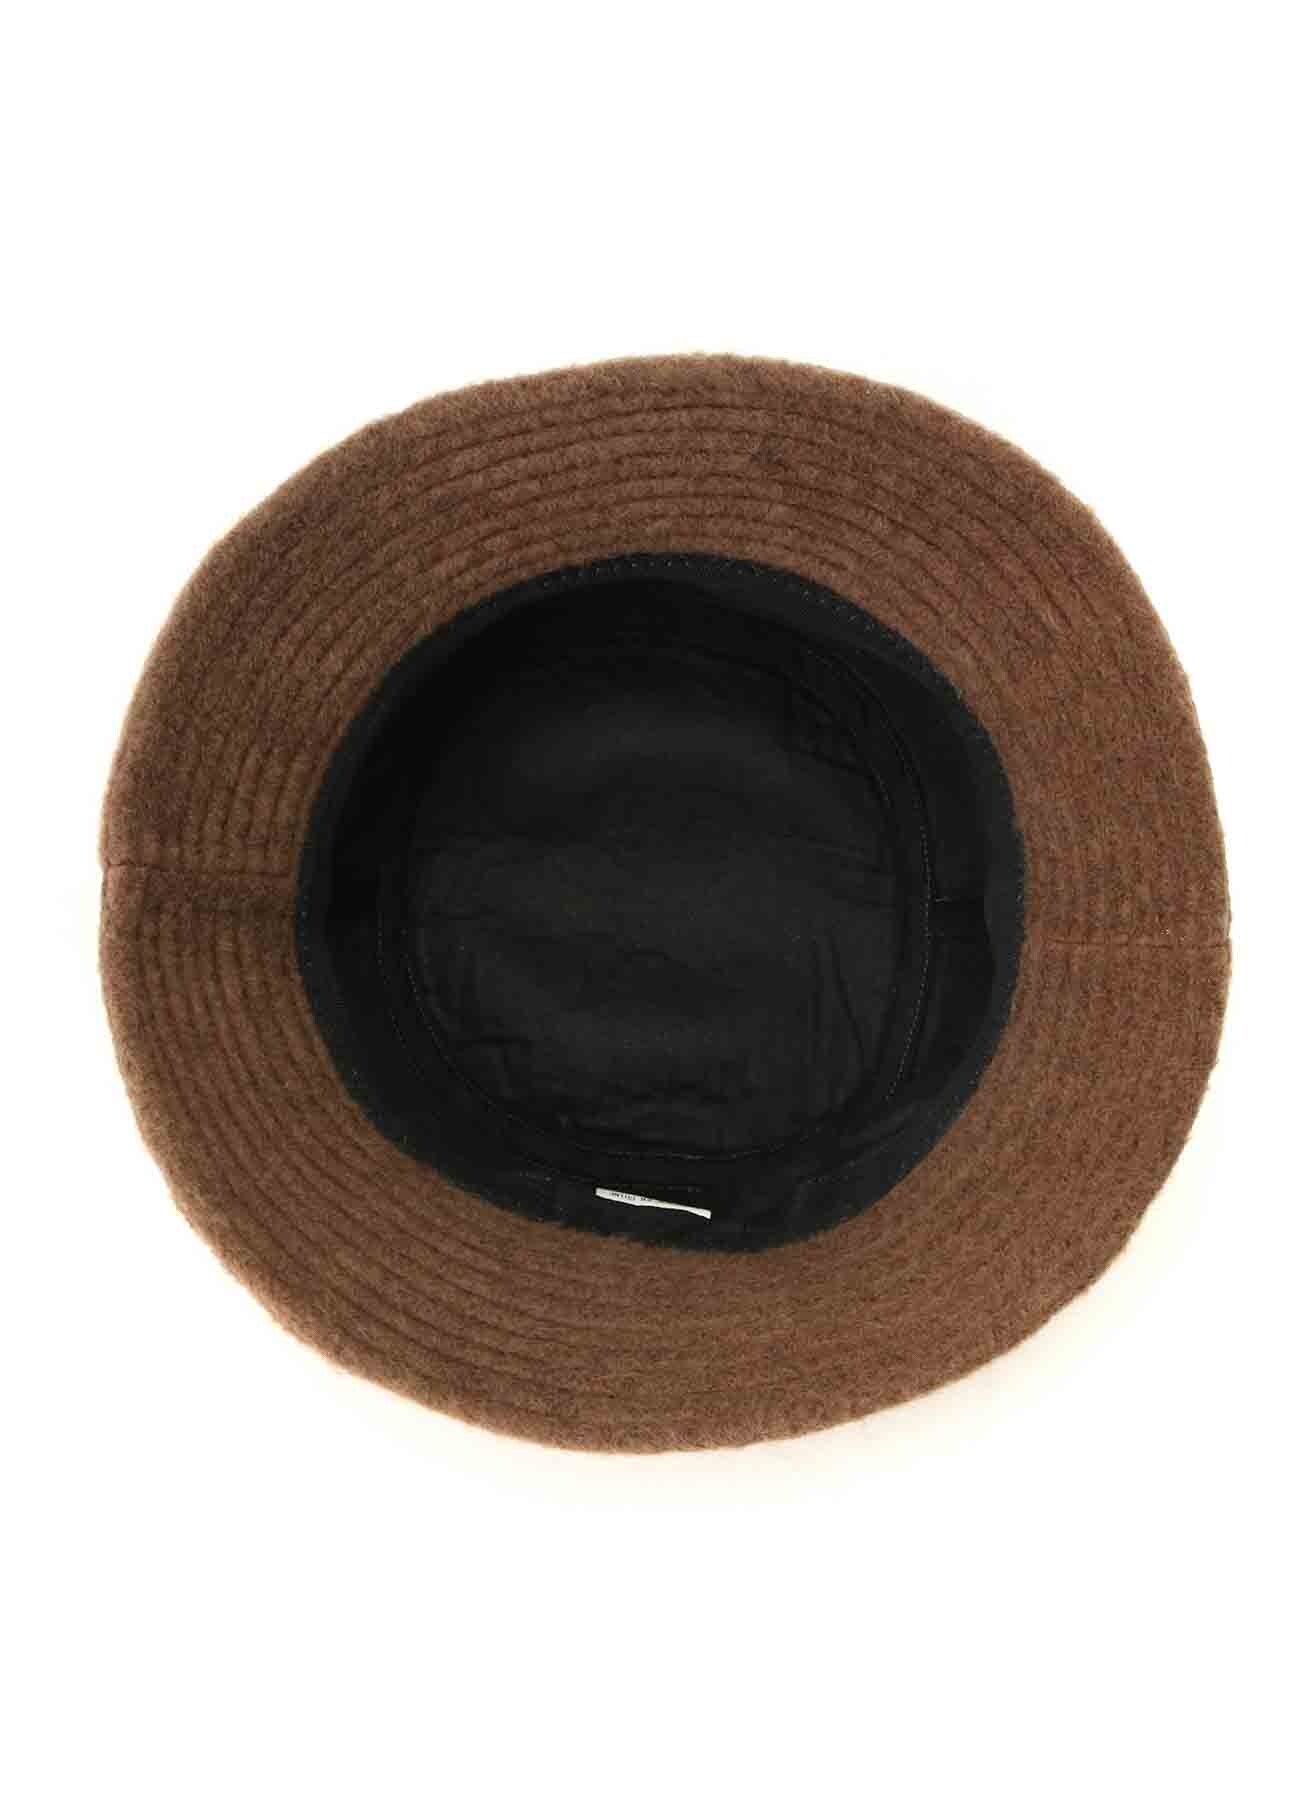 Acrylic Fur Bucket Hat